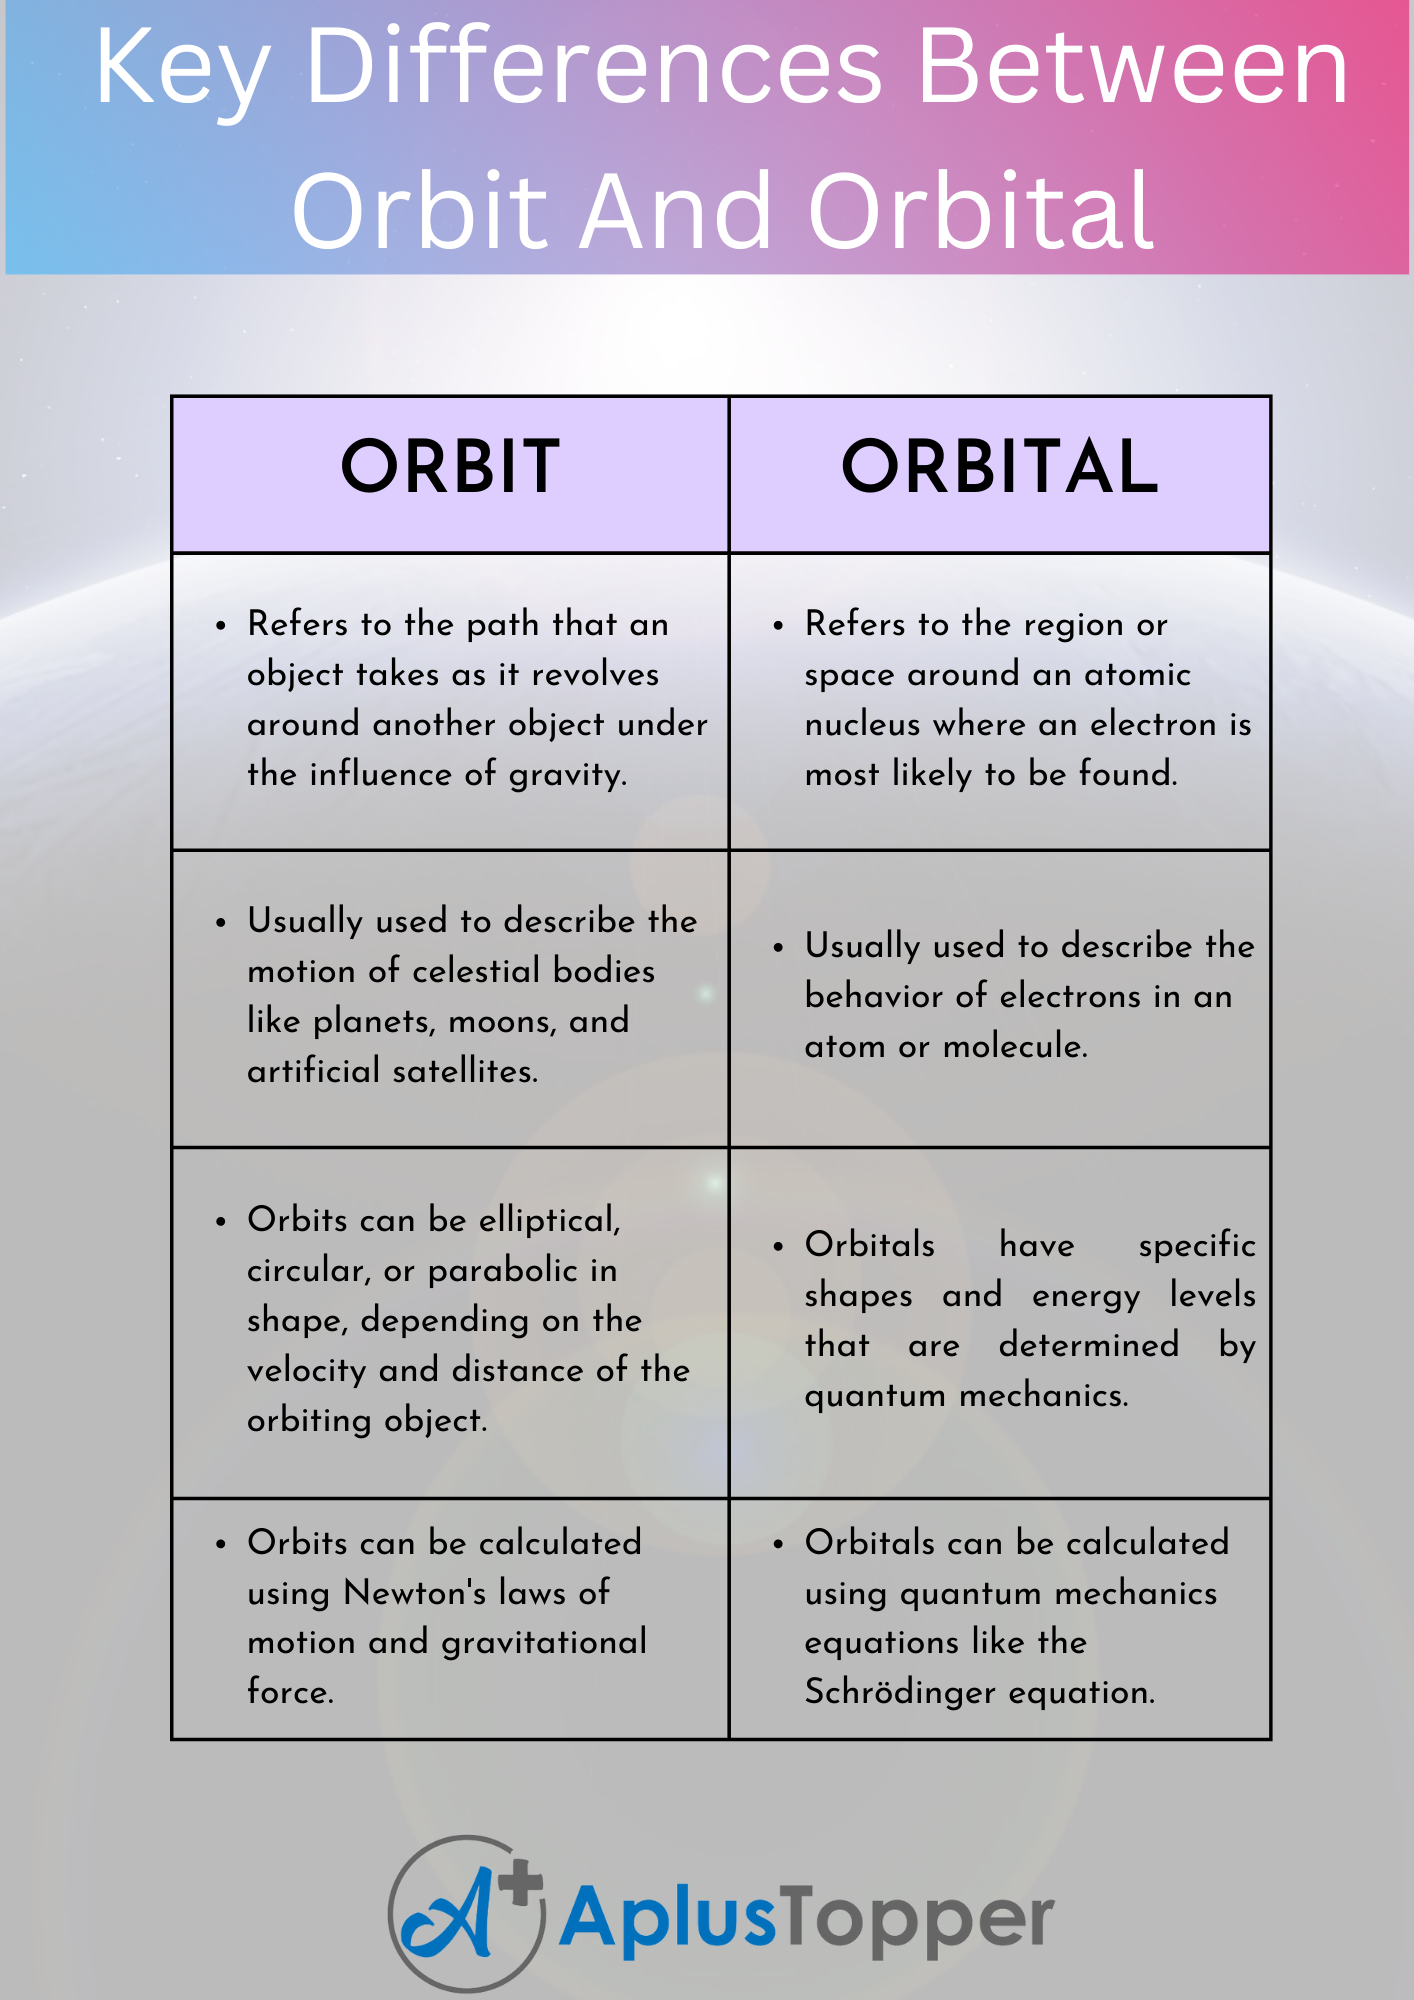 Key Differences Between Orbit And Orbital